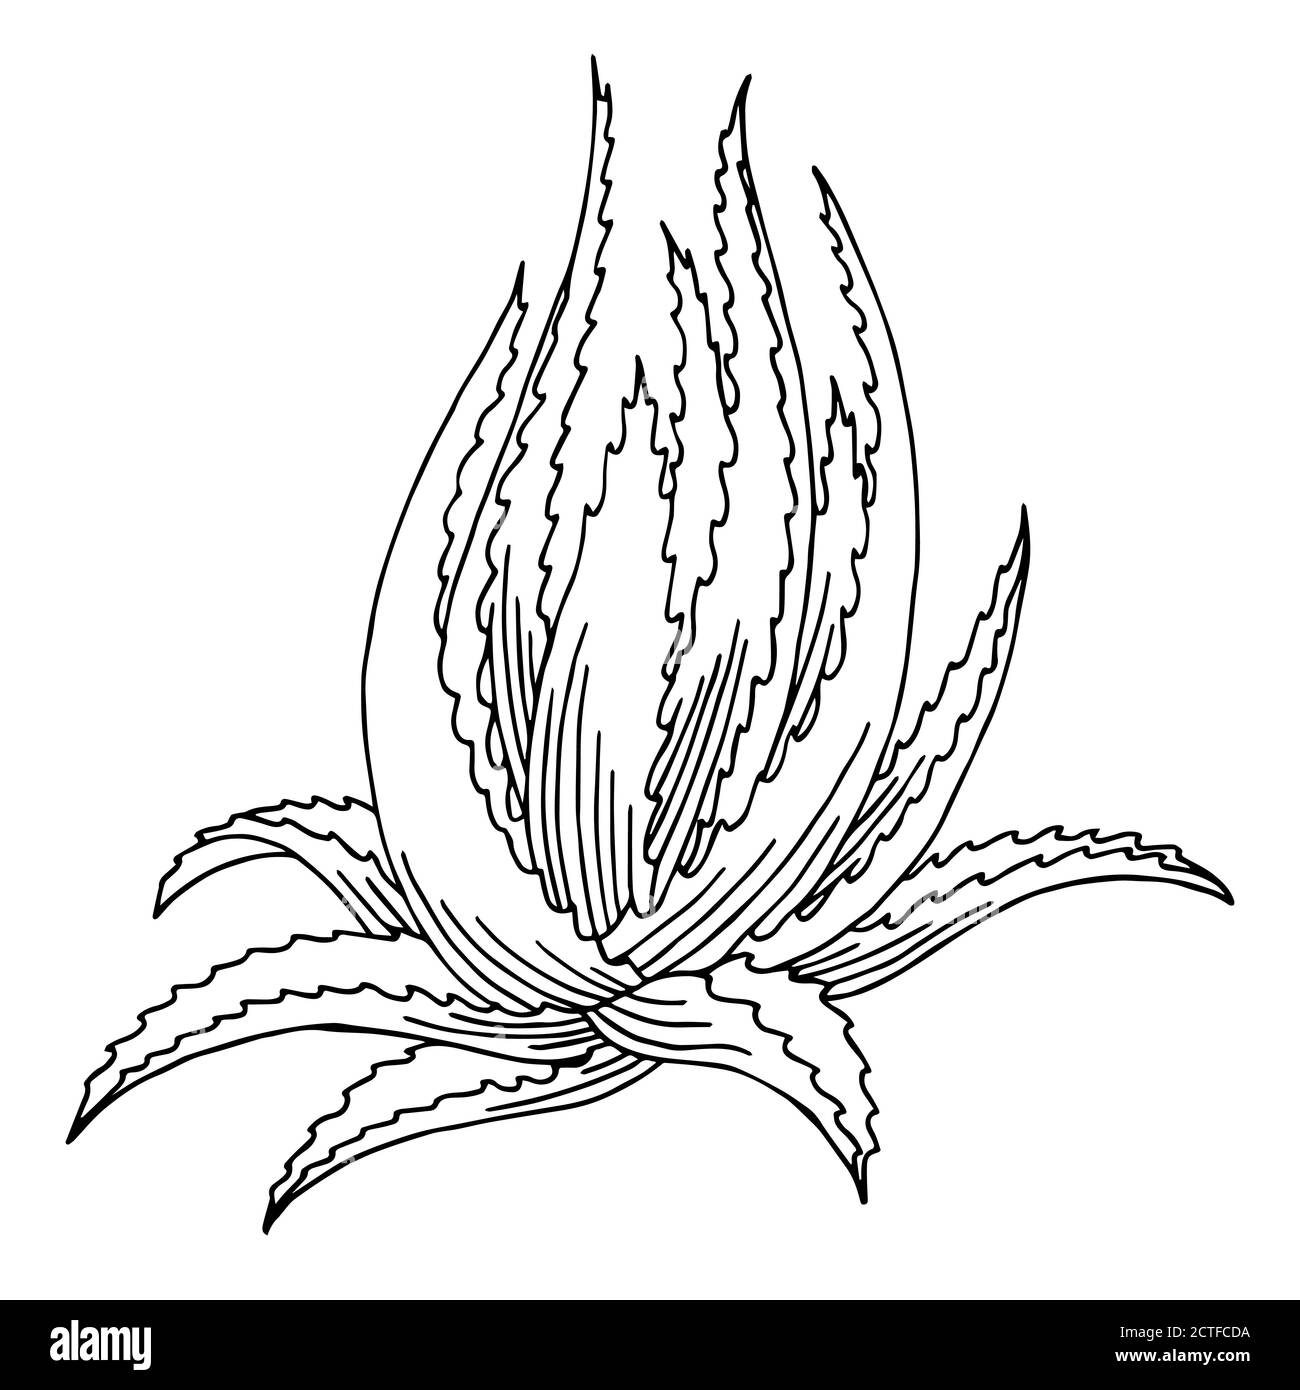 Aloe vera illustration Black and White Stock Photos & Images - Alamy